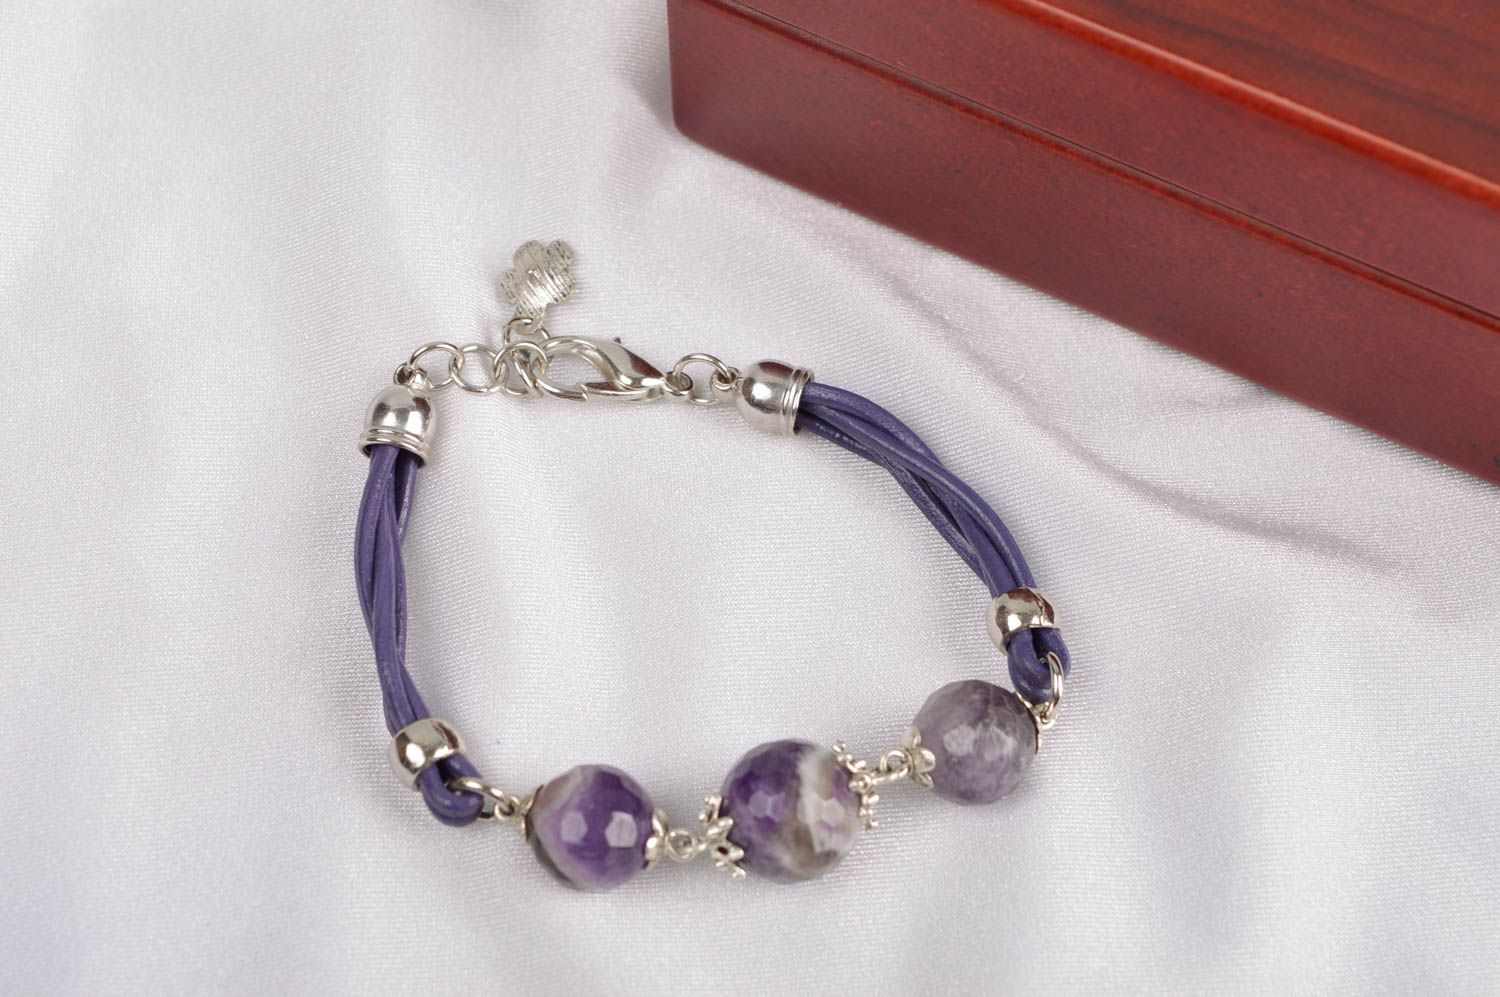 Beautiful handmade gemstone beaded bracelet leather bracelet designs small gifts photo 1